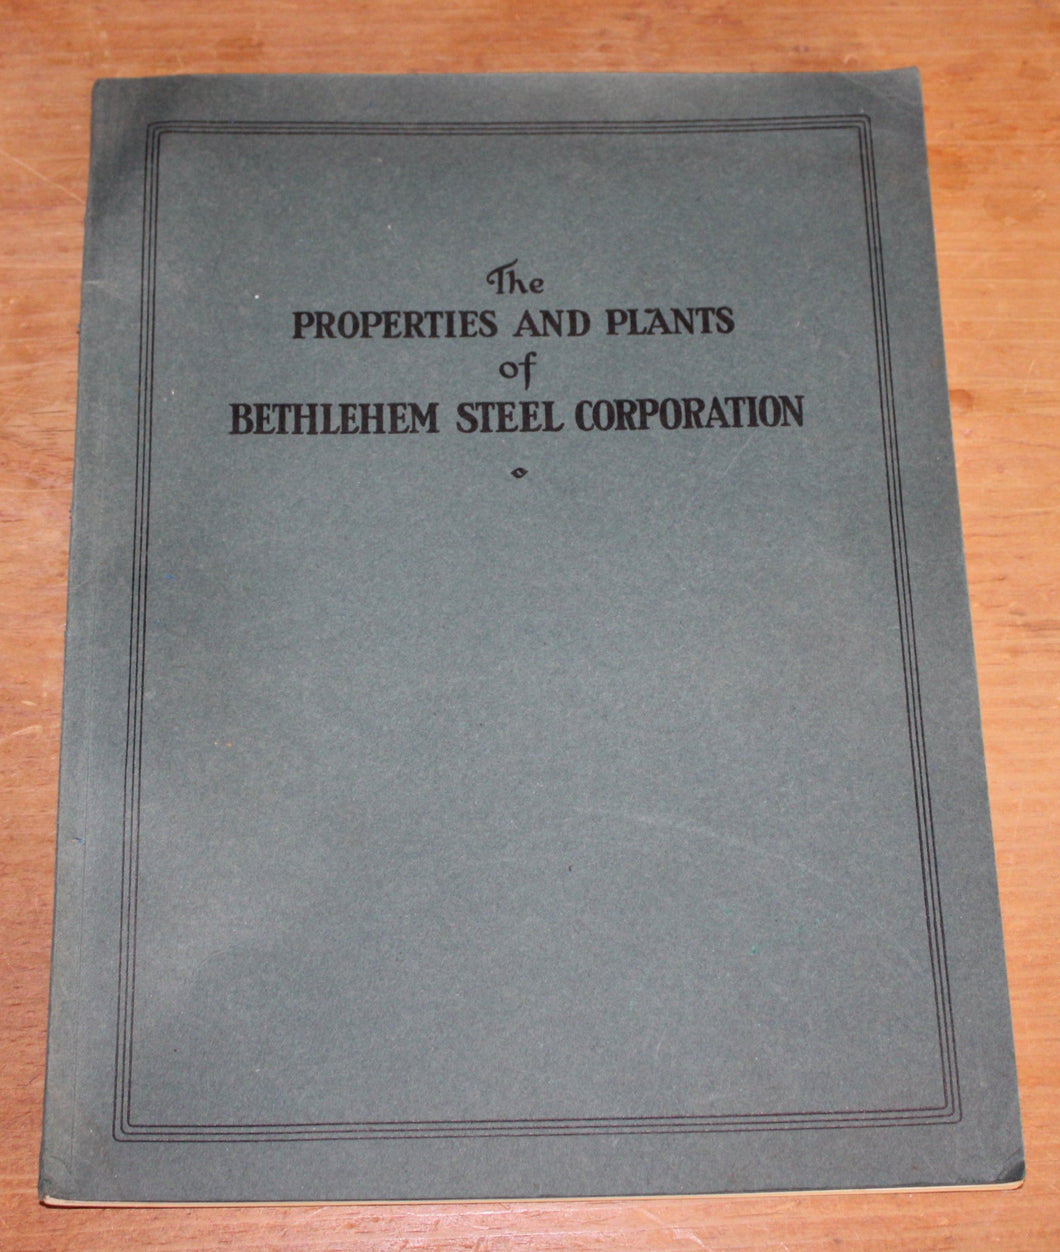 Original – “The Properties & Plants of Bethlehem Steel Corporation” 1925, for Stockholder's